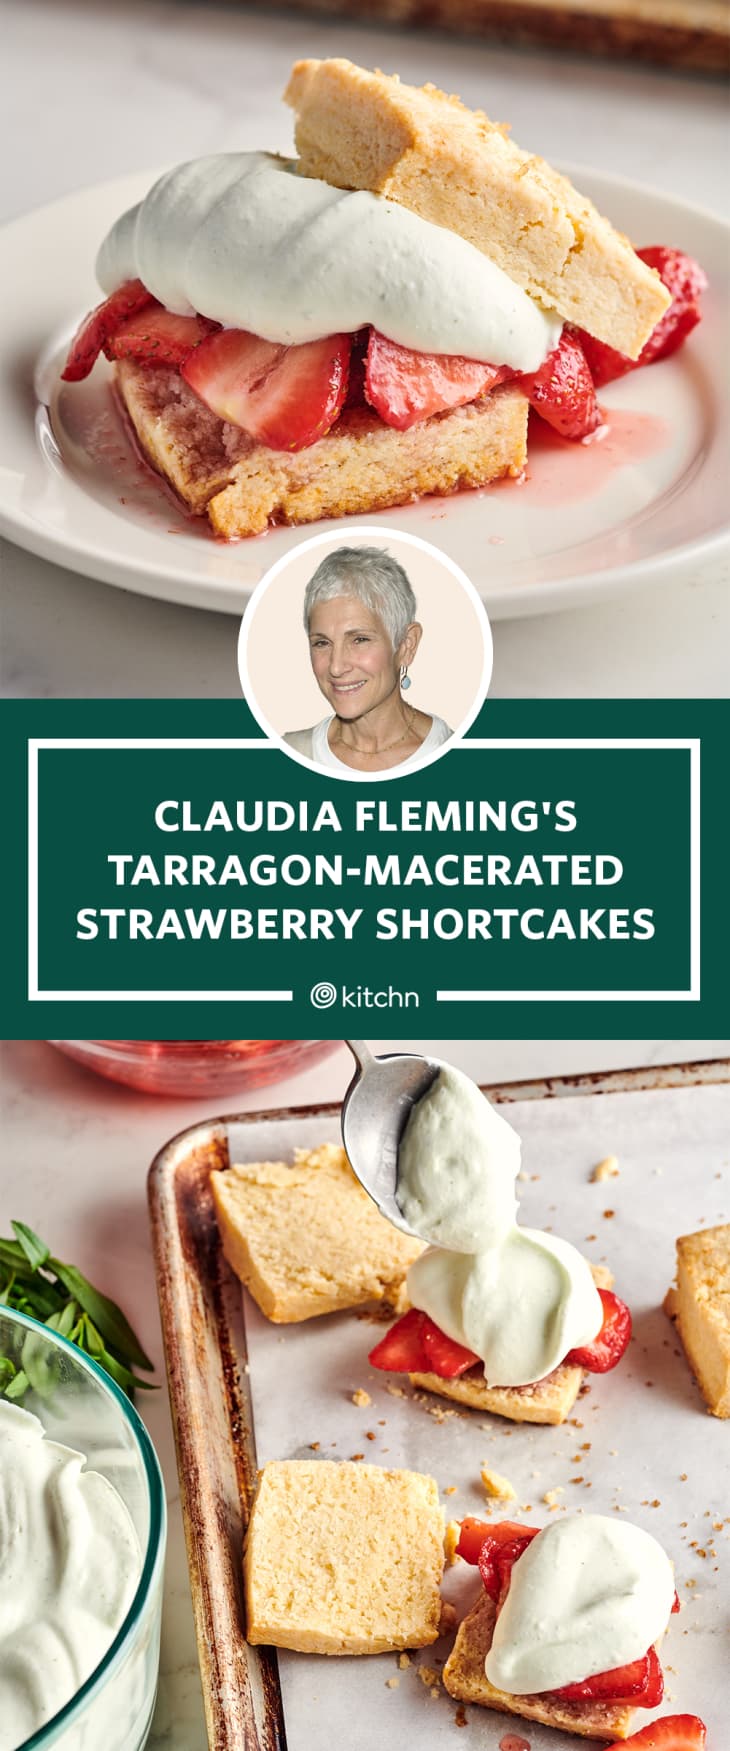 I Tried Claudia Fleming's Tarragon-Macerated Strawberry Shortcakes ...